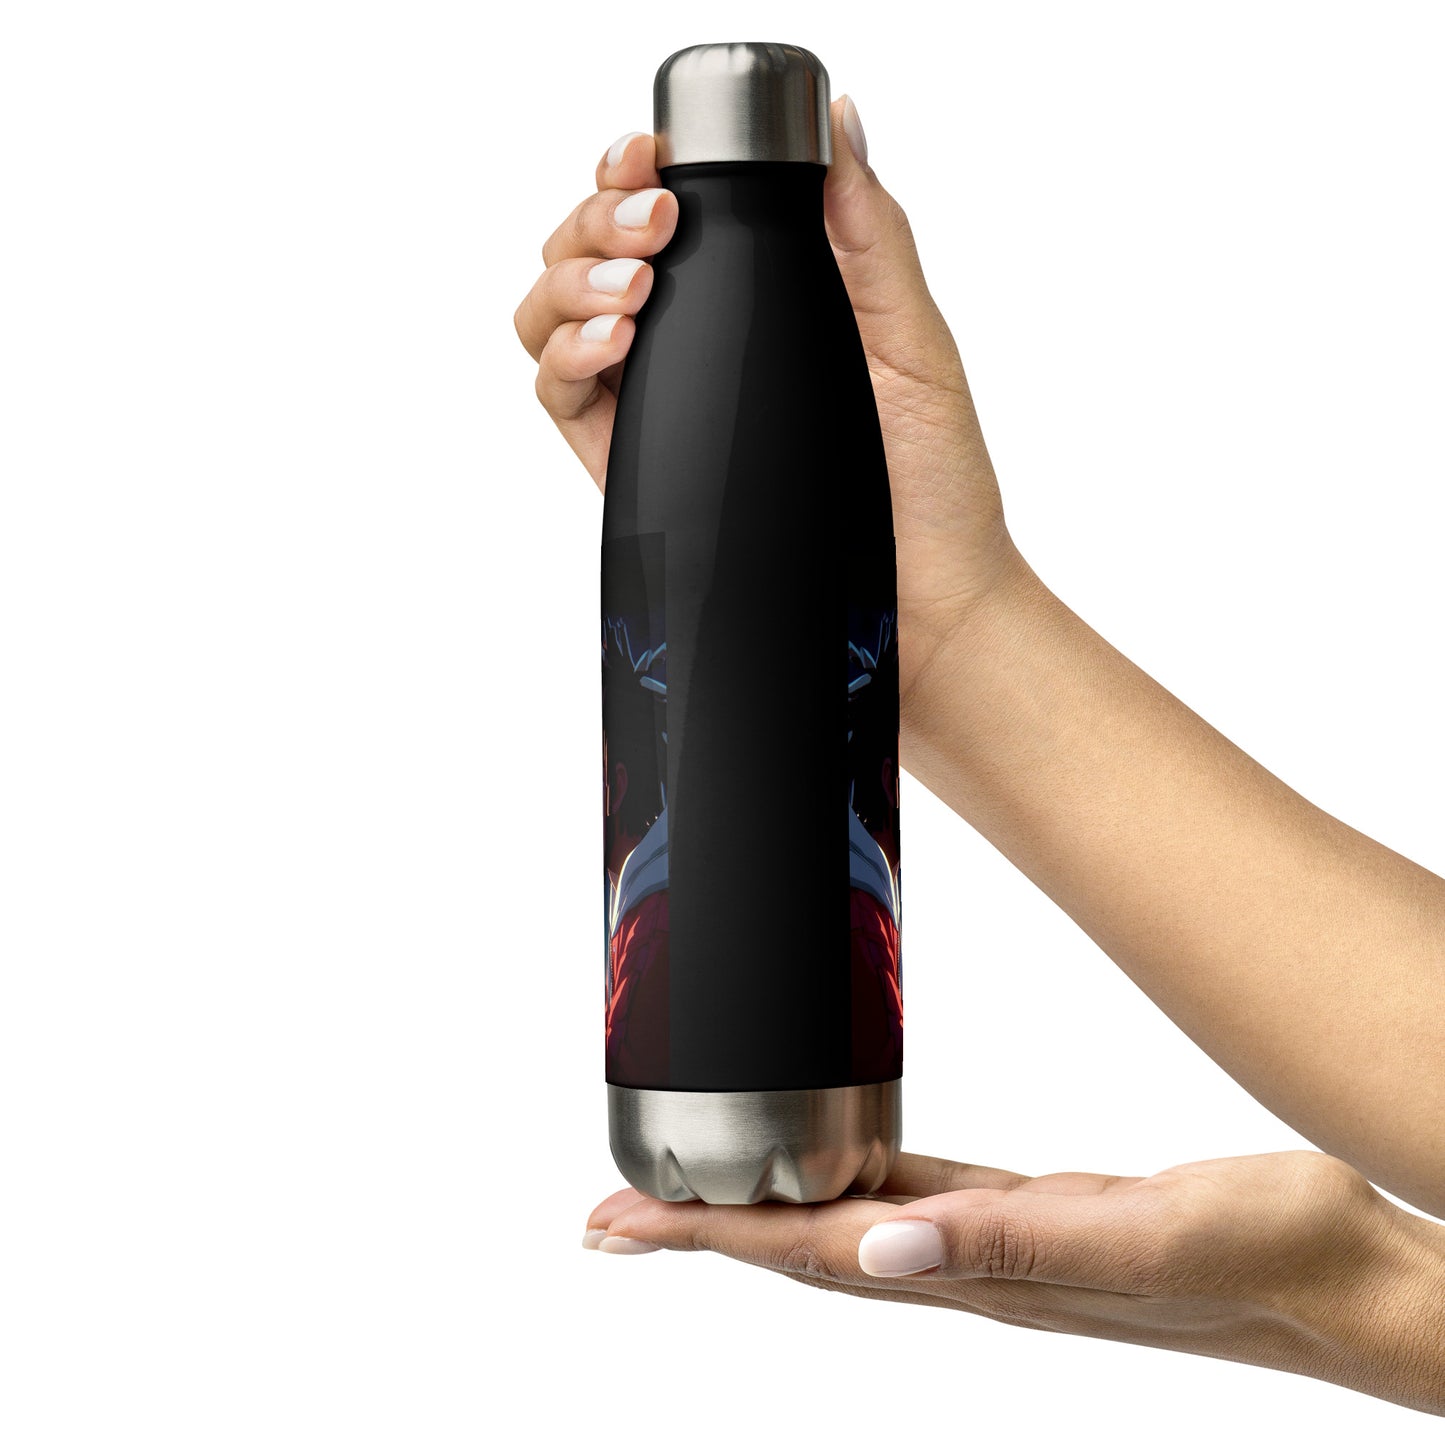 Task Slayerz #3 - Stainless steel water bottle